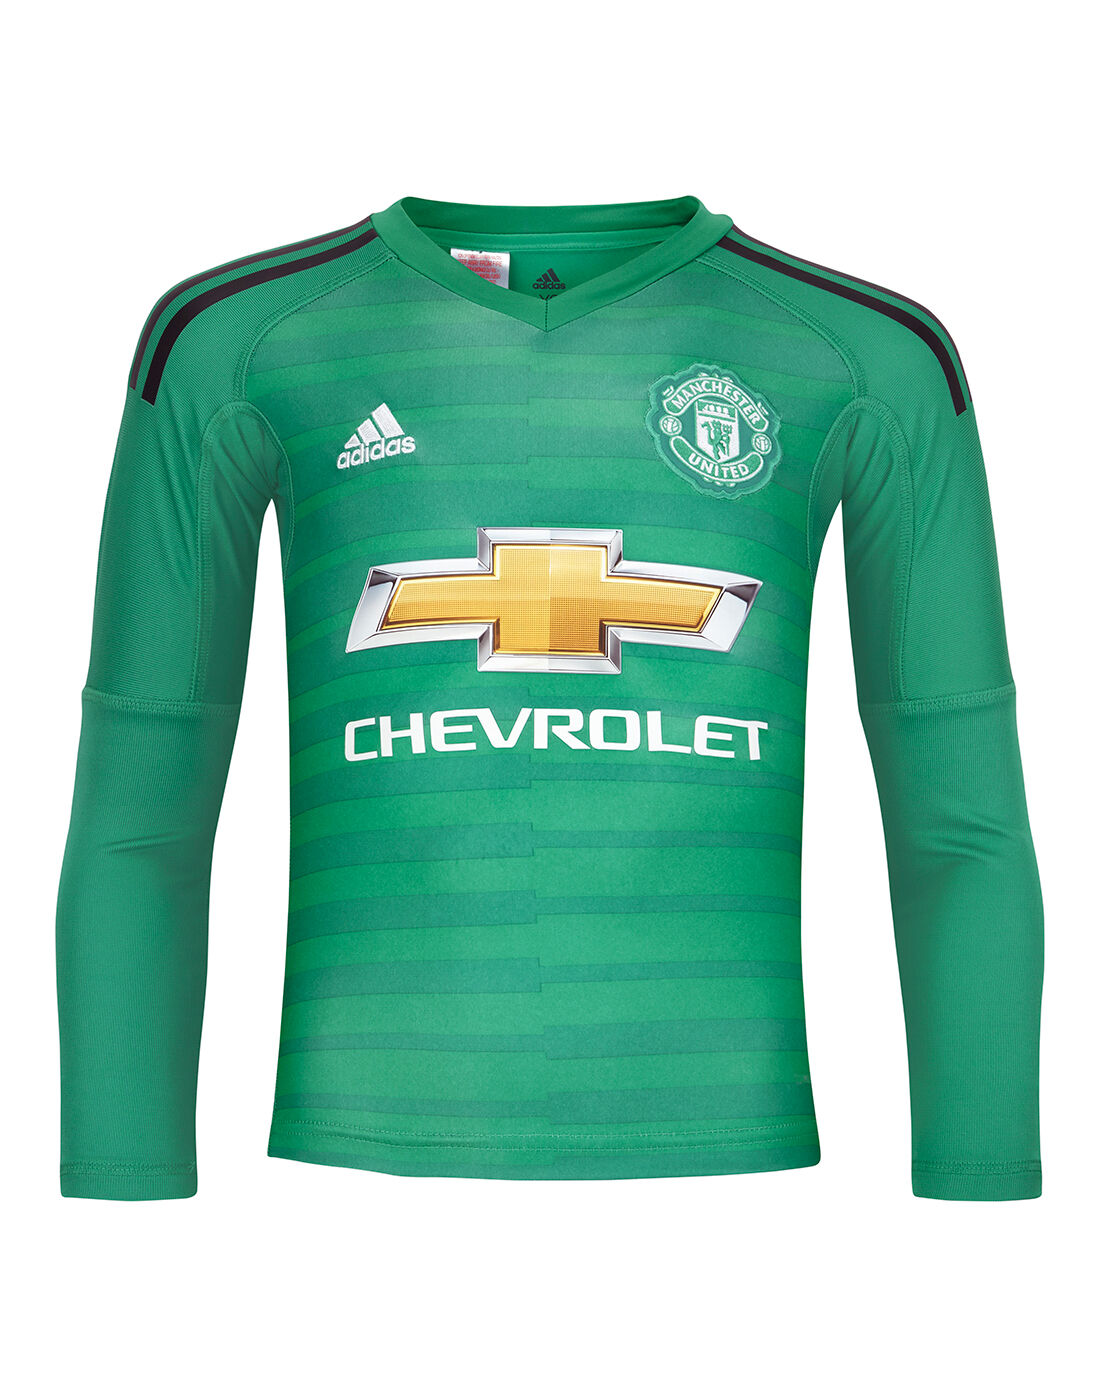 united goalkeeper jersey